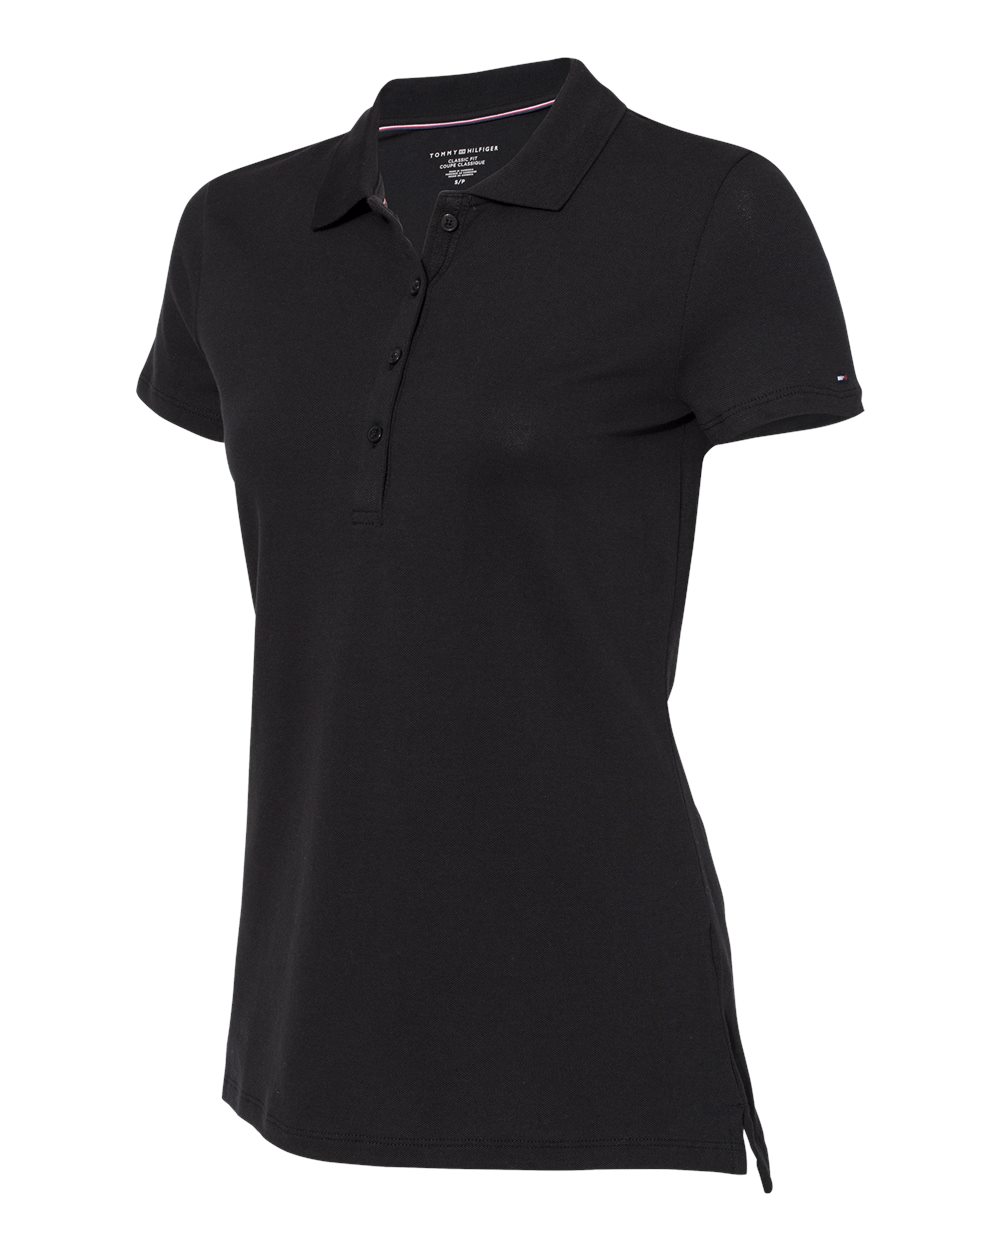 Tommy Hilfiger 13H4534 - Women's Classic Fit Ivy Pique Sport Shirt